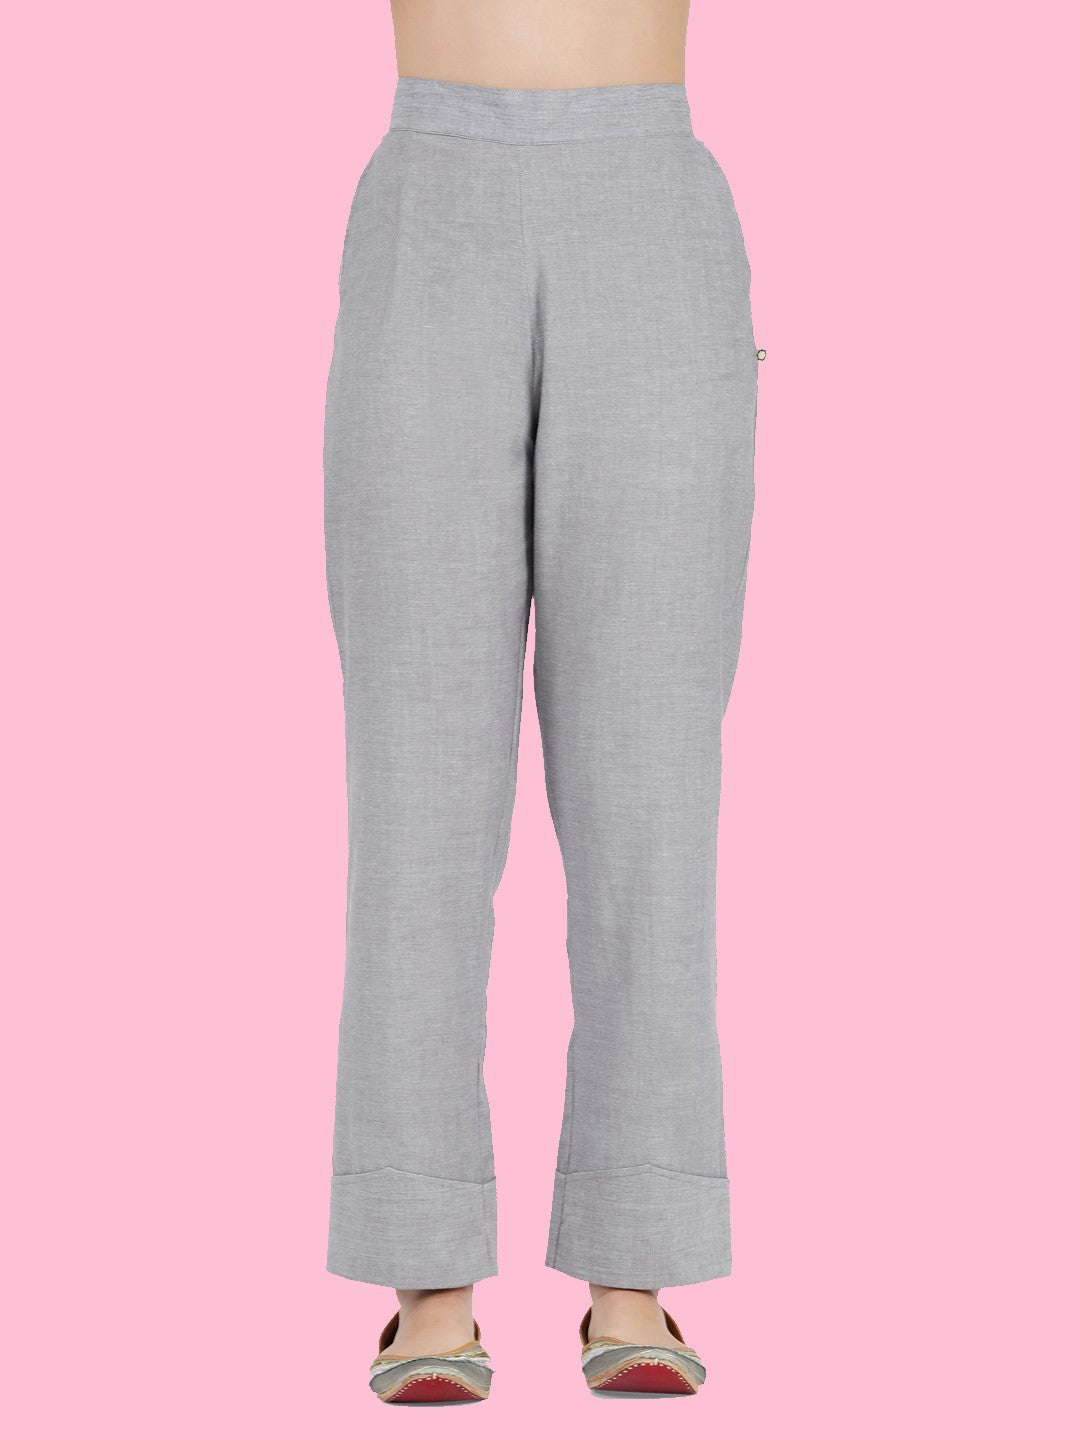 Grey Solid Cuffed Pants